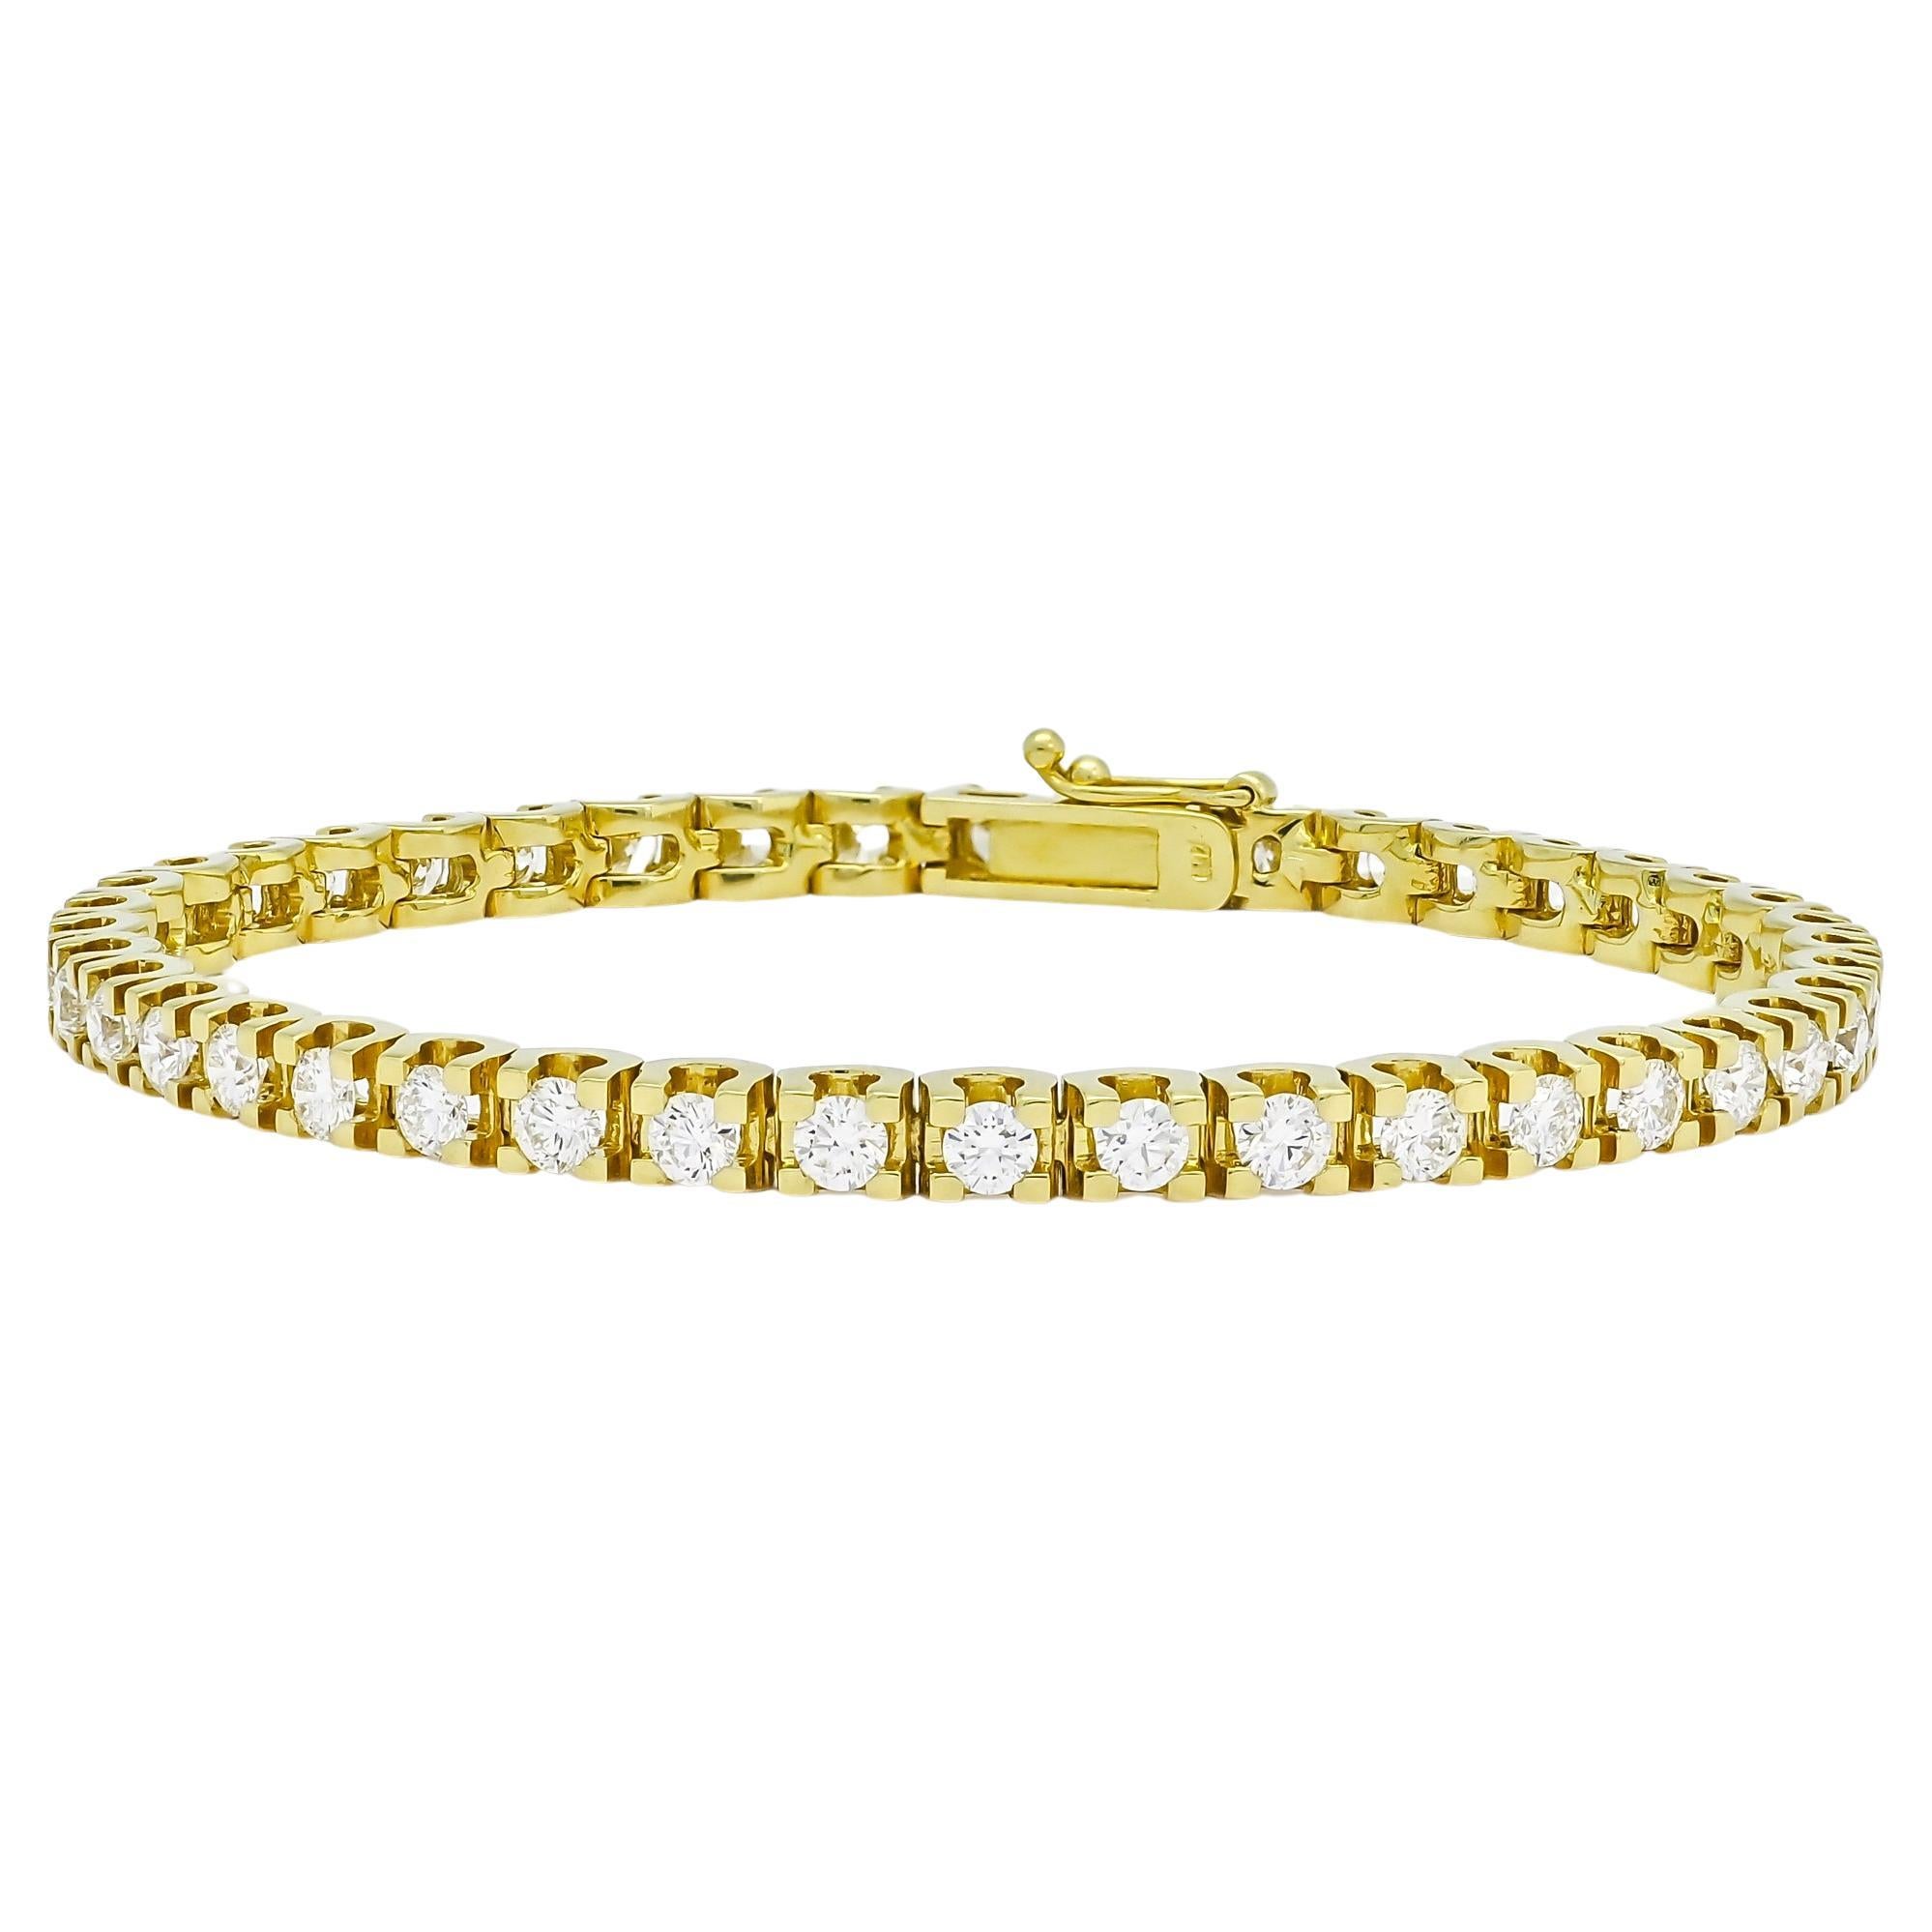 Bracelet tennis en or jaune 18 carats avec diamants naturels 4,04 carats 